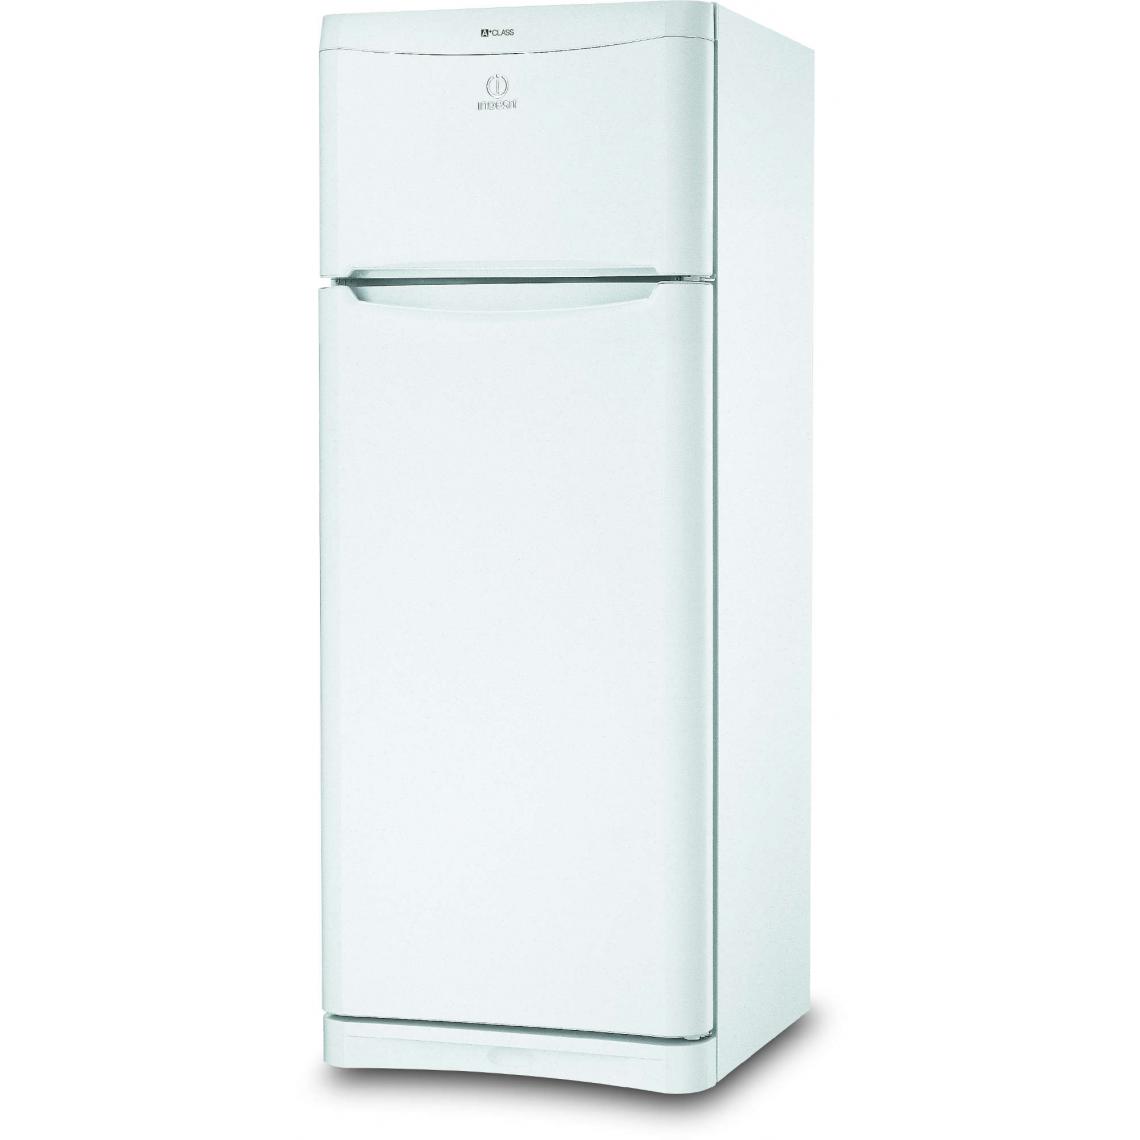 Indesit - Refrigerateur 2 portes INDESIT TAA5V1 - Réfrigérateur